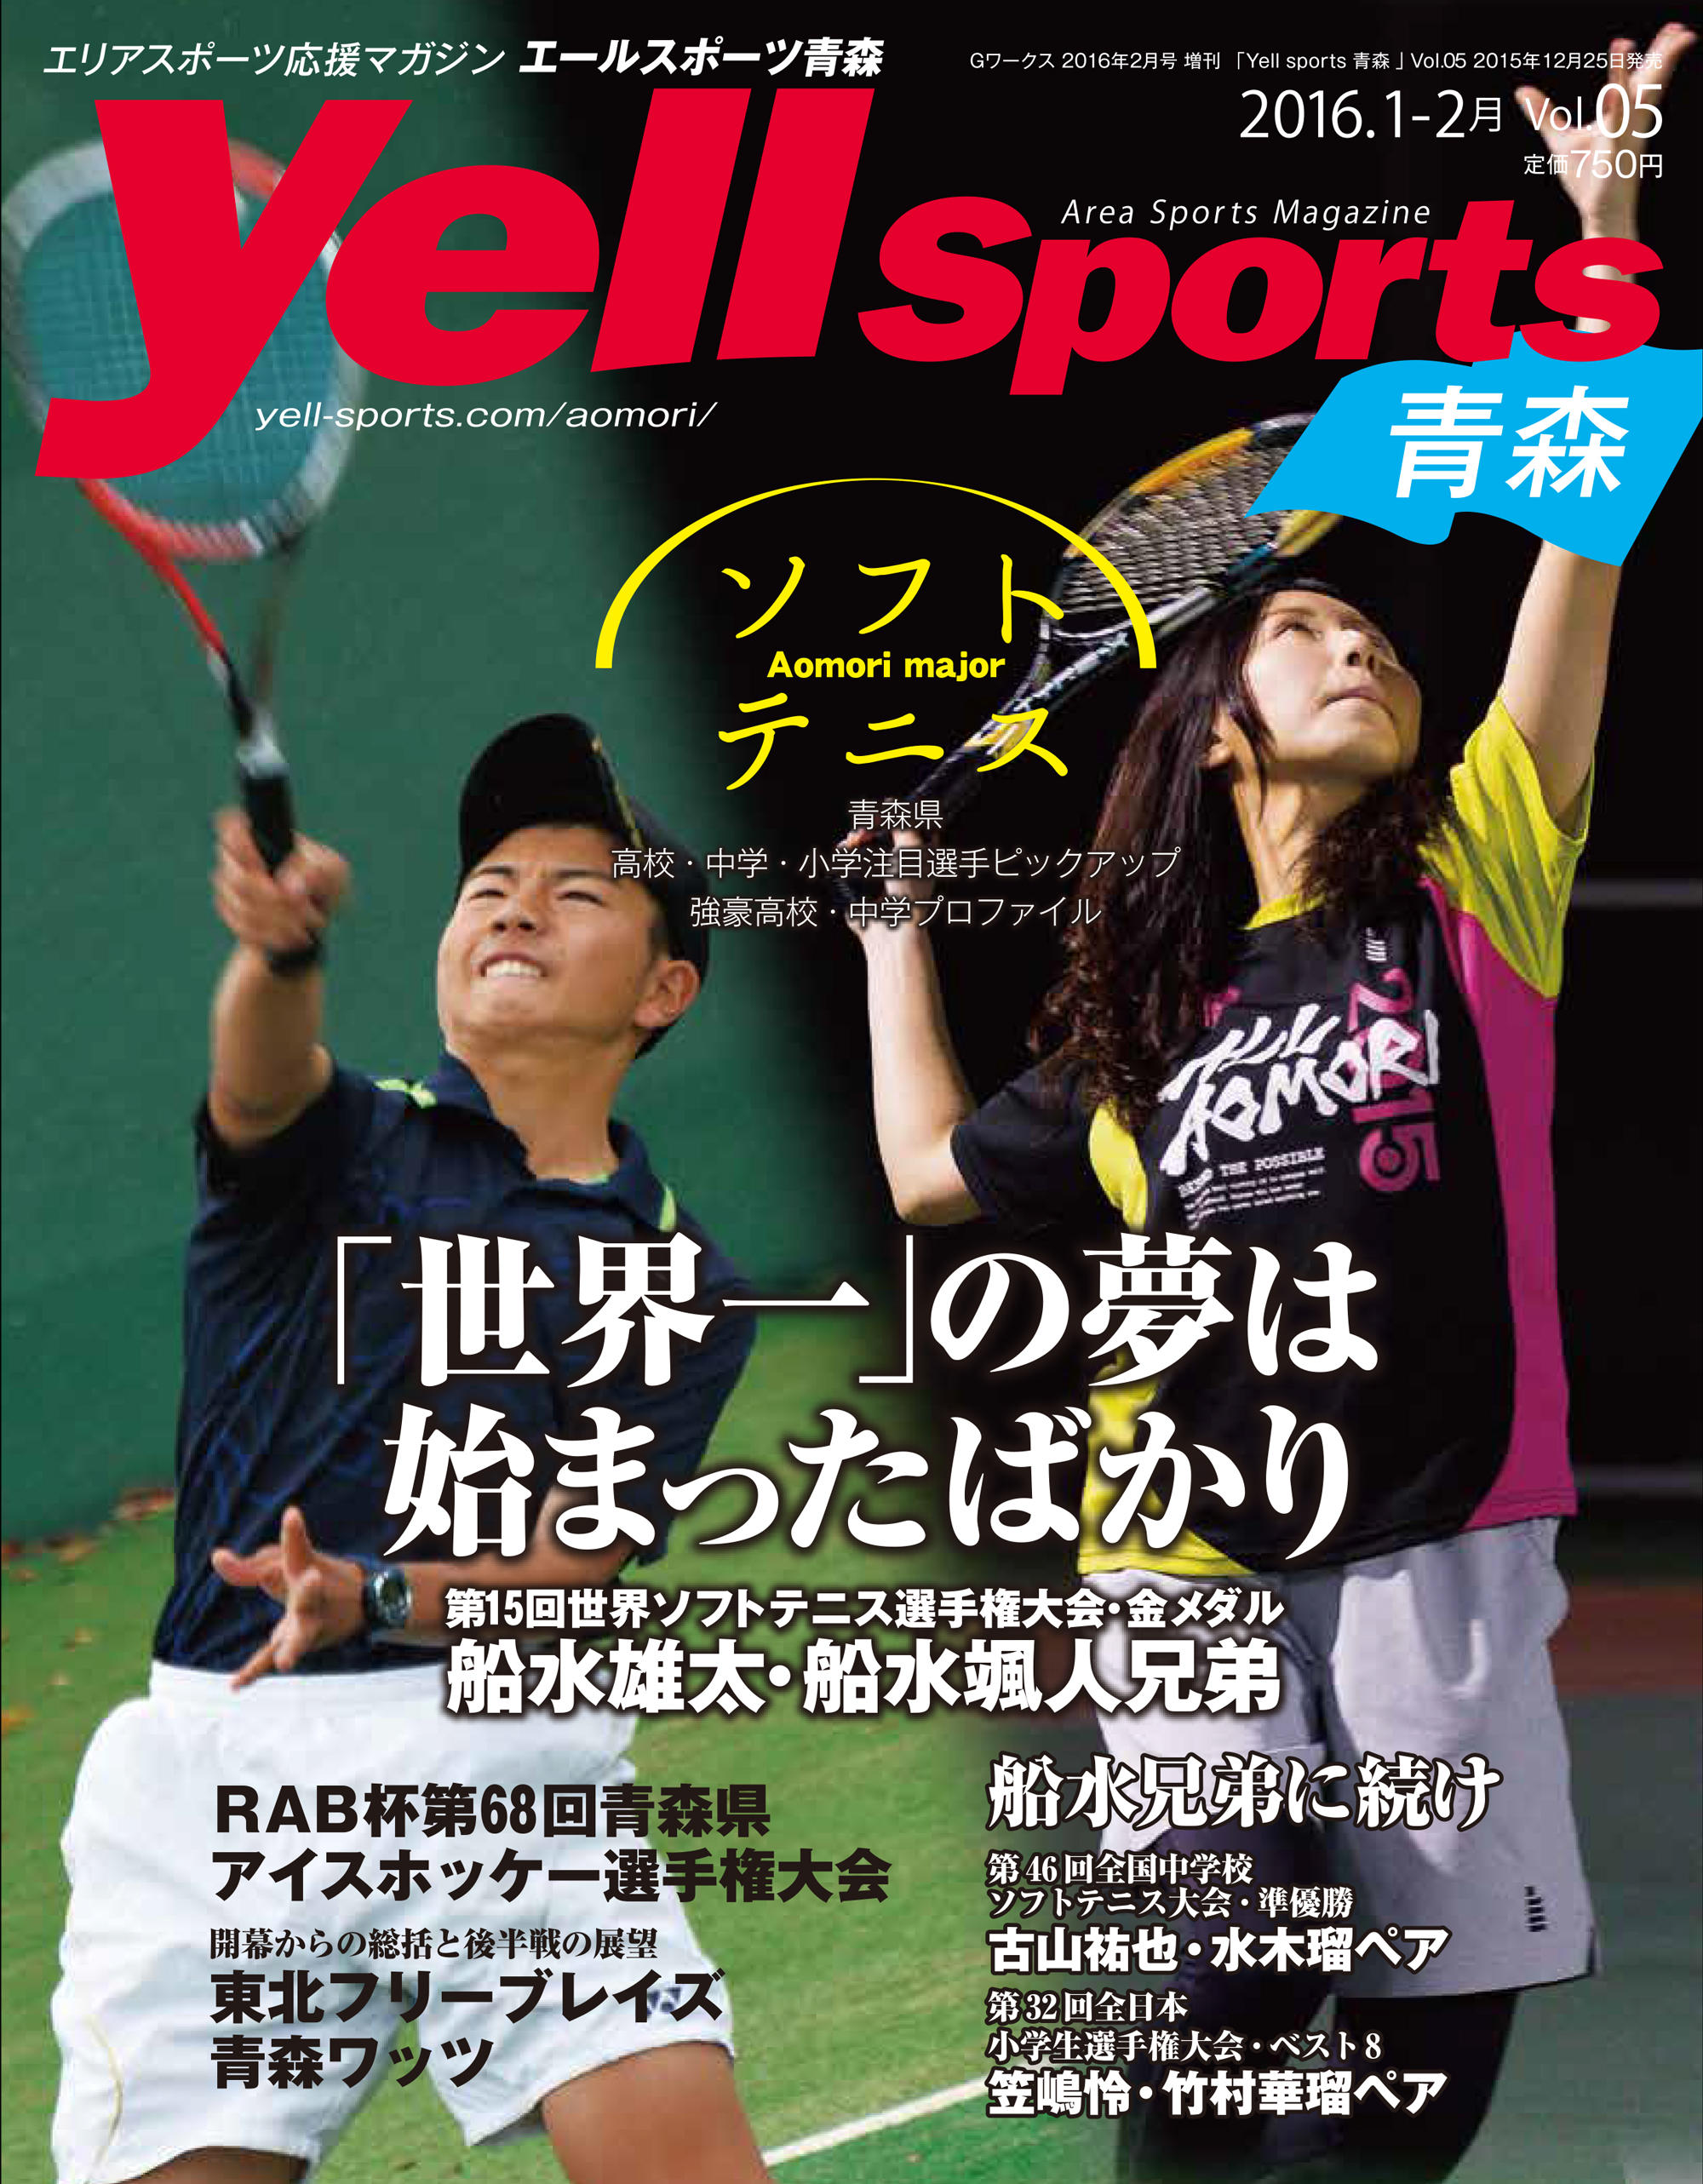 http://yell-sports.com/aomori/article/2015/ysa05_1.jpg